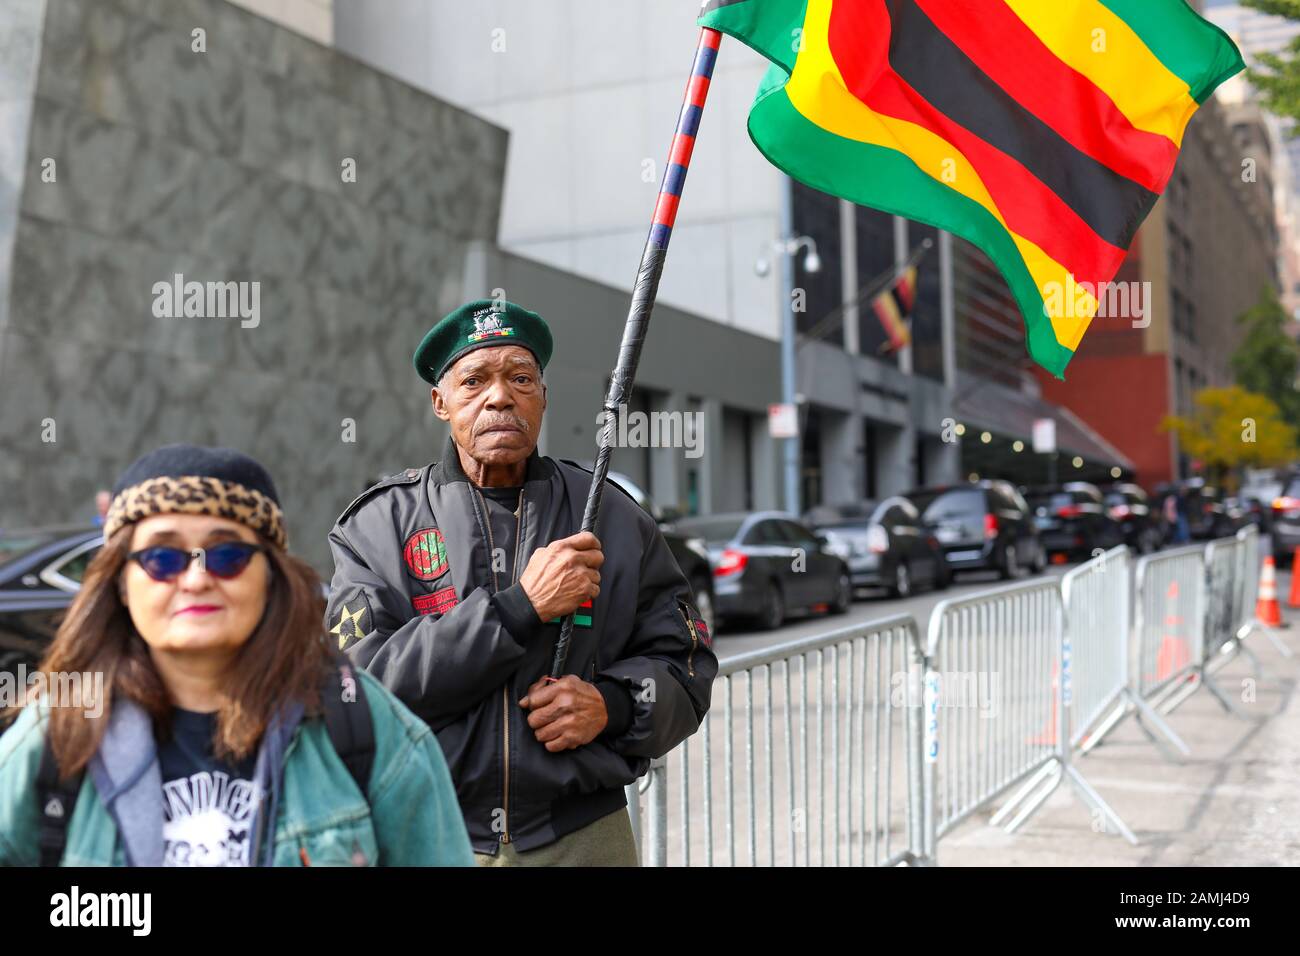 New York, USA, Oktober 25, 2019 Zimbabwe demonstration opposite the UN building. Stock Photo